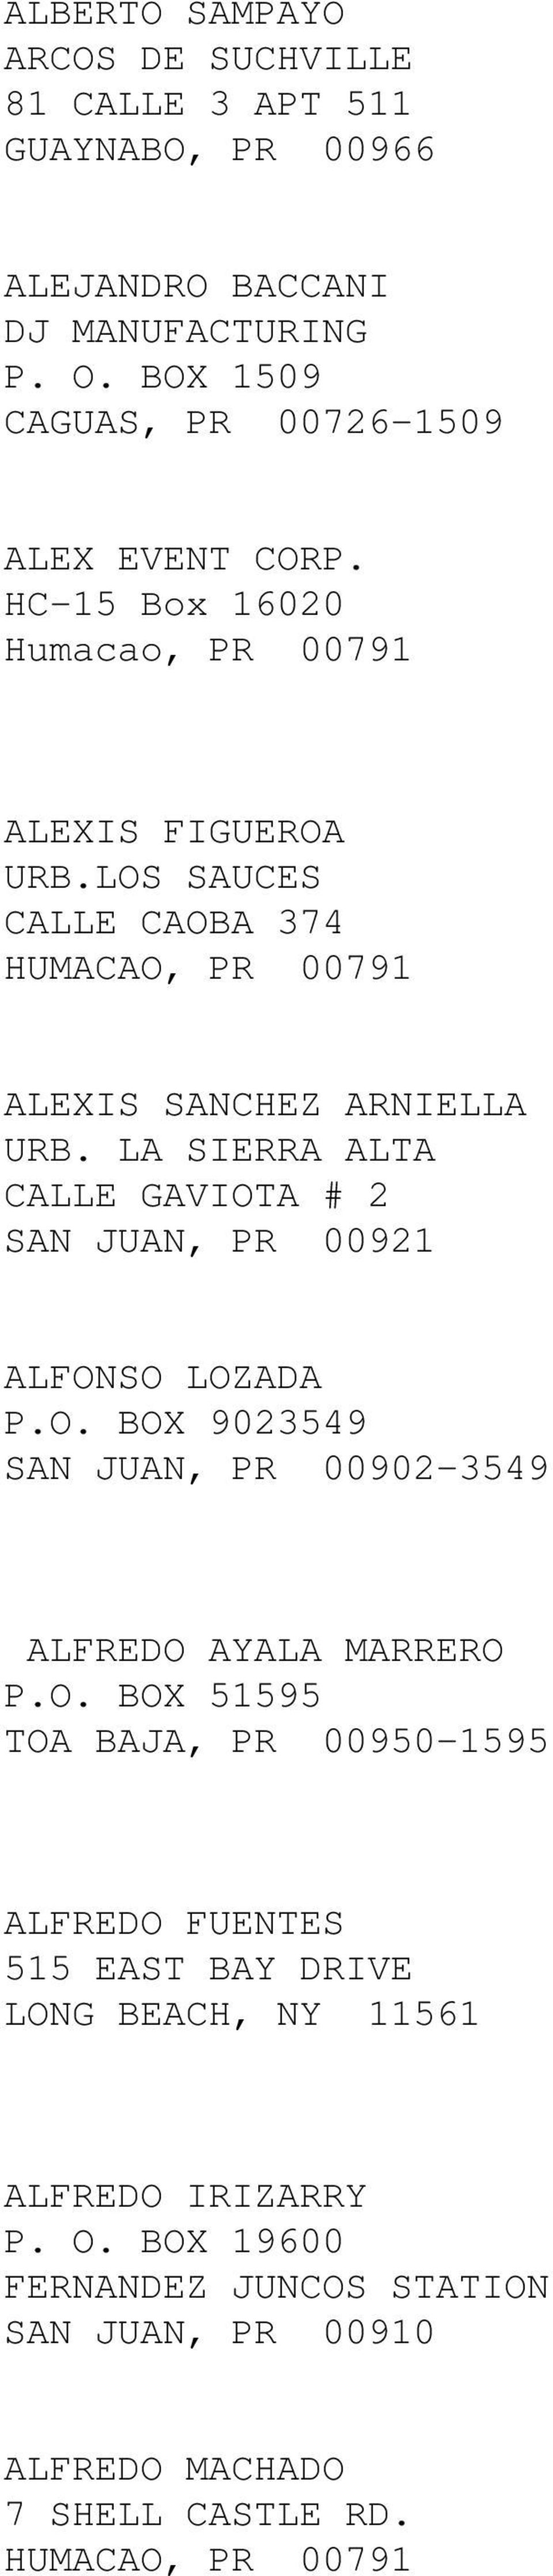 LOS SAUCES CALLE CAOBA 374 ALEXIS SANCHEZ ARNIELLA URB. LA SIERRA ALTA CALLE GAVIOTA # 2 SAN JUAN, PR 00921 ALFONSO LOZADA P.O. BOX 9023549 SAN JUAN, PR 00902-3549 ALFREDO AYALA MARRERO P.